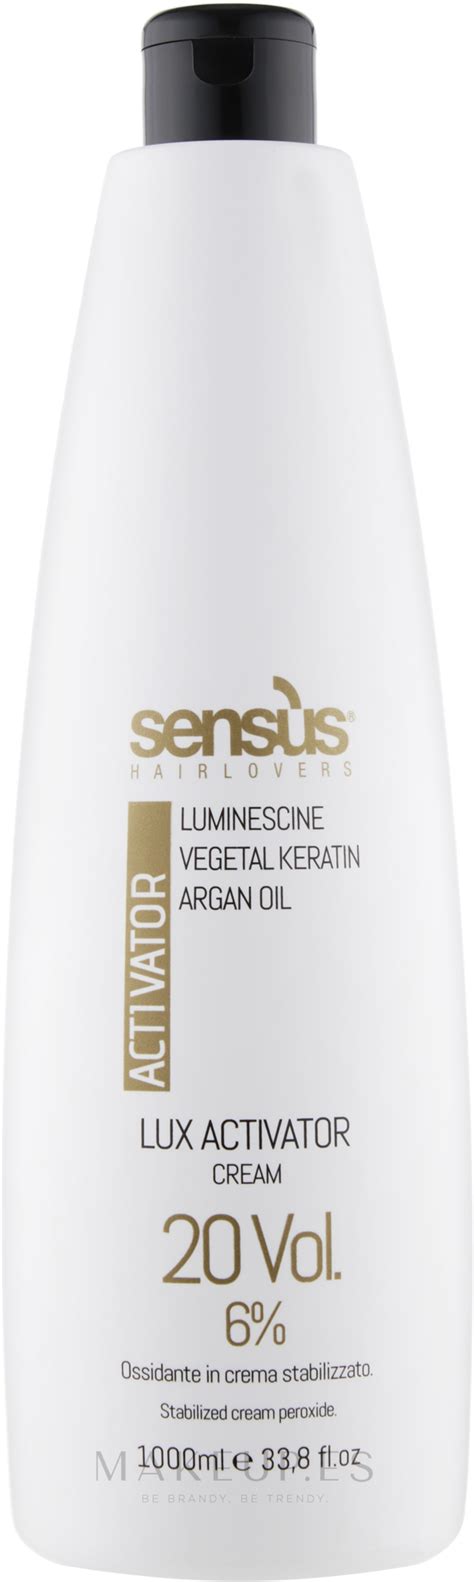 Sensus Lux Activator Cream Vol Crema Oxidante Profesional